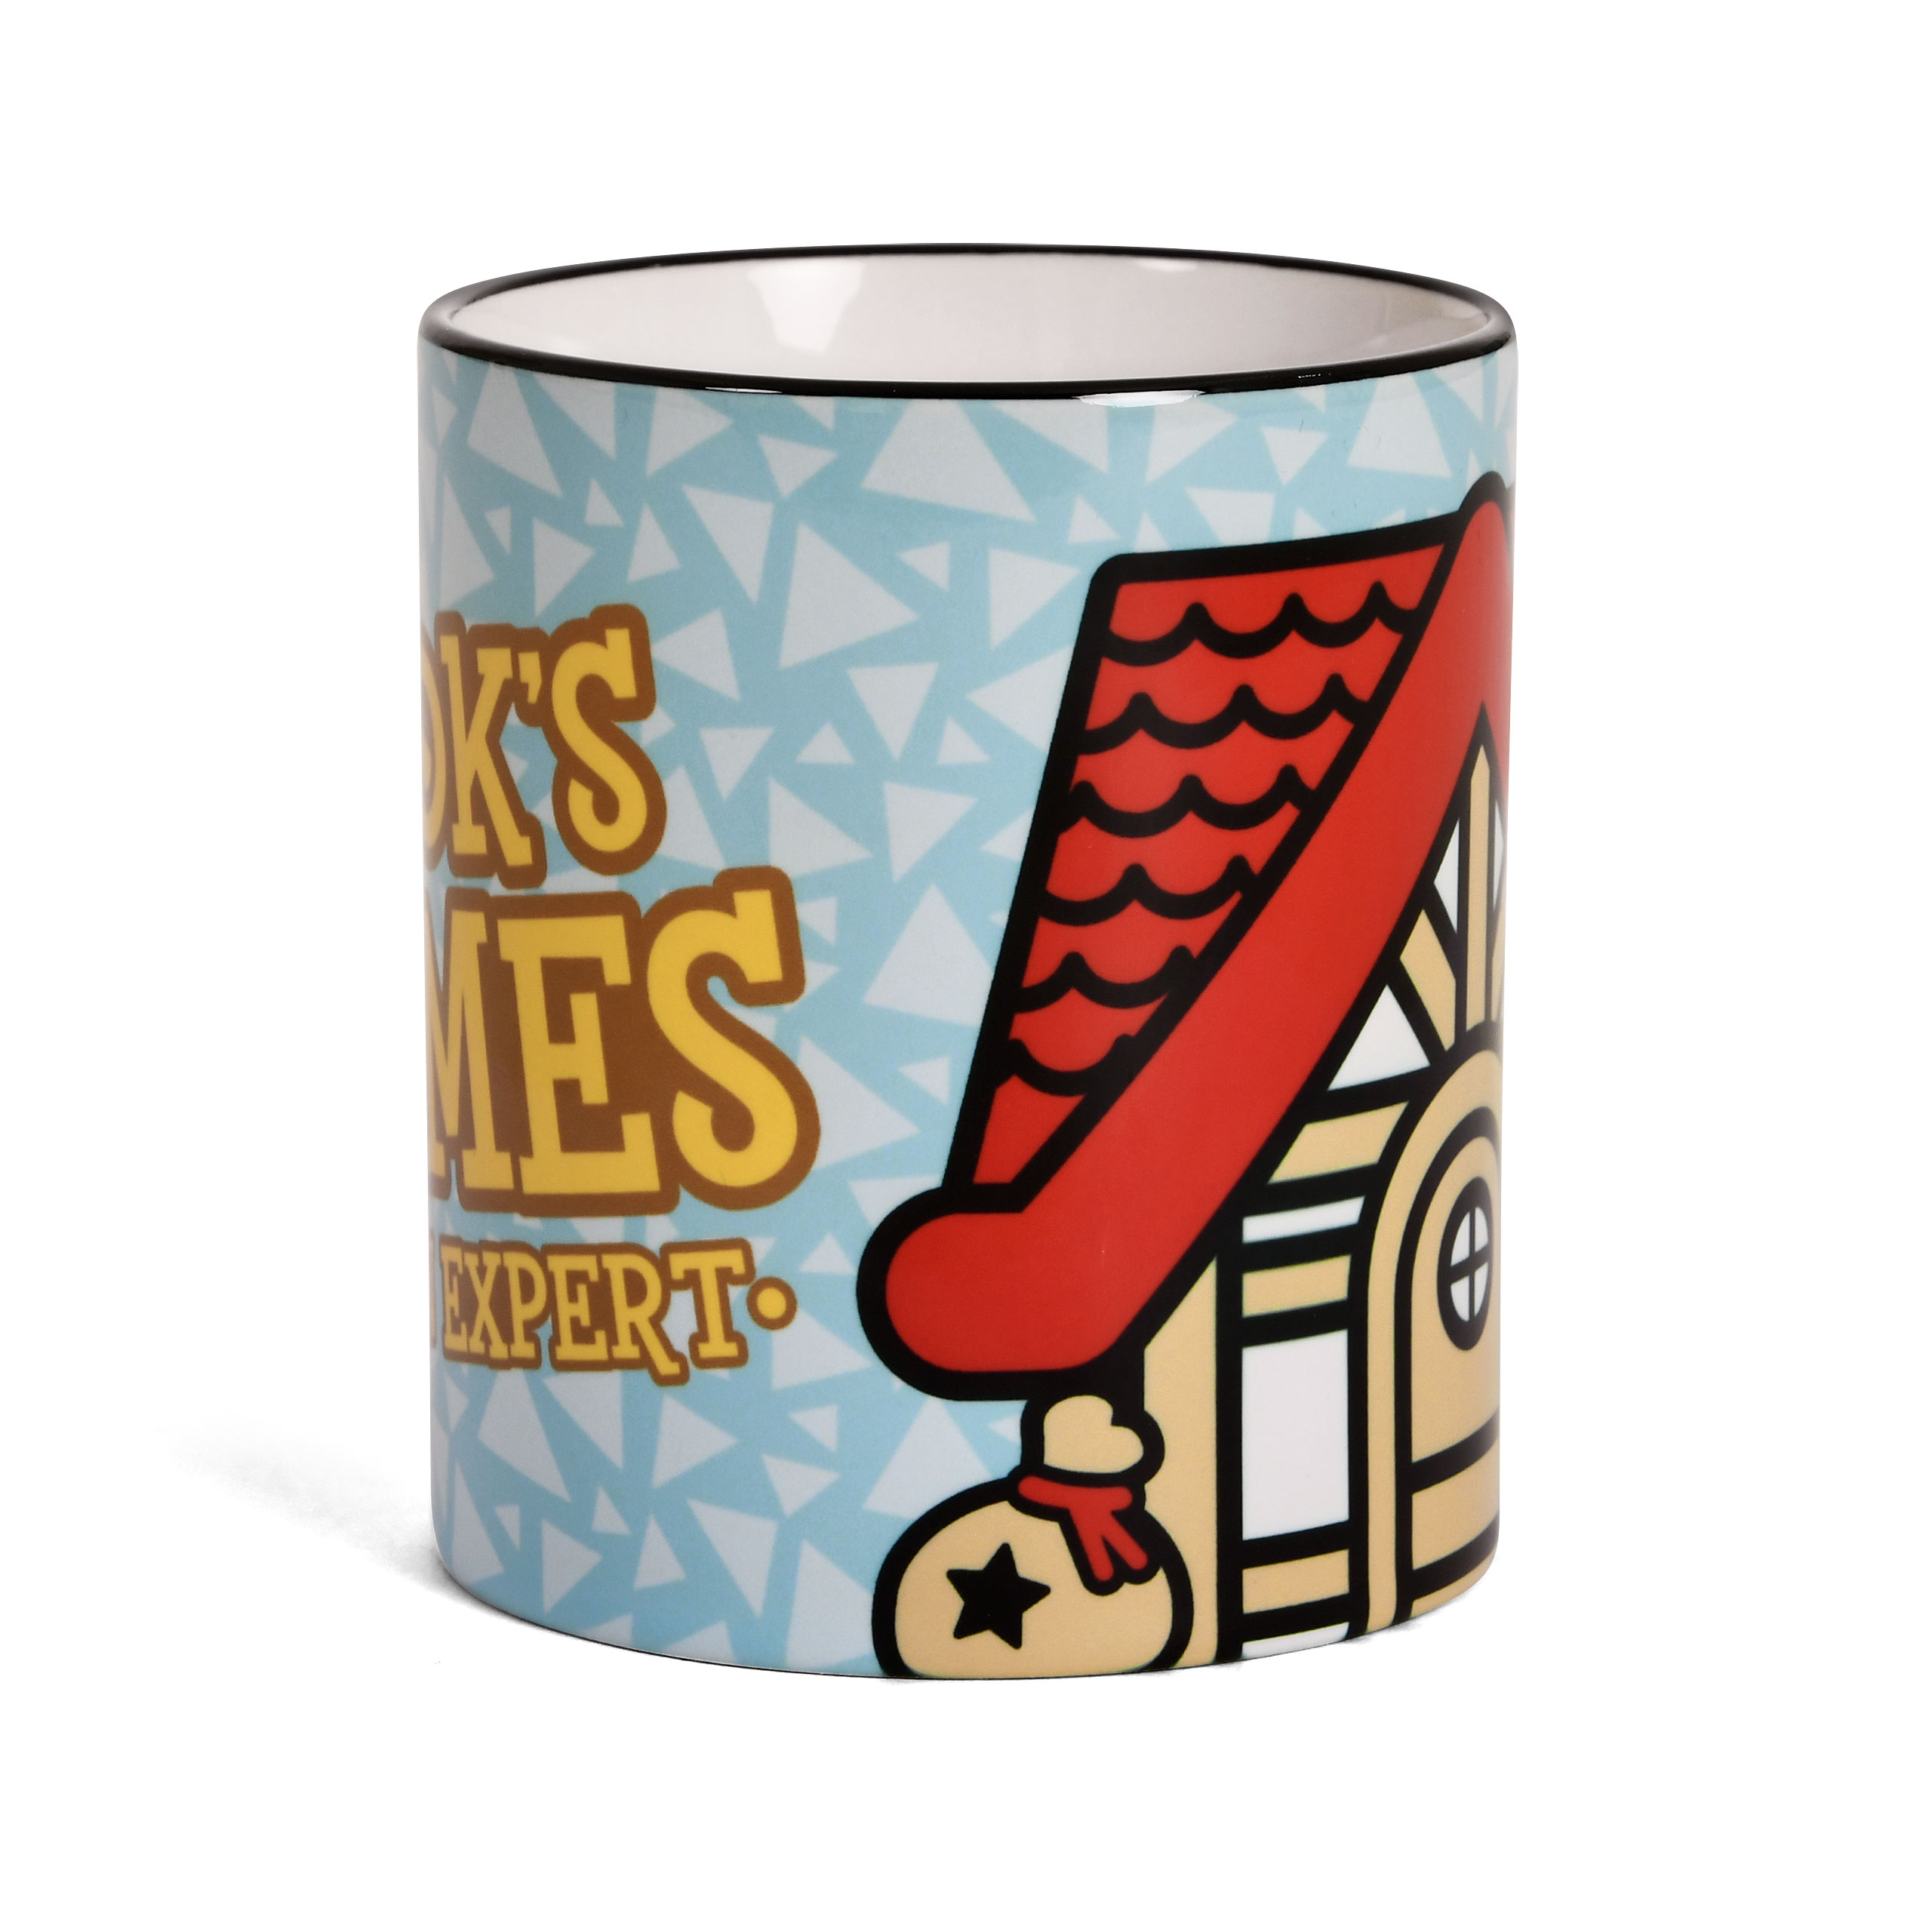 Nook's Homes Mug for Animal Crossing Fans